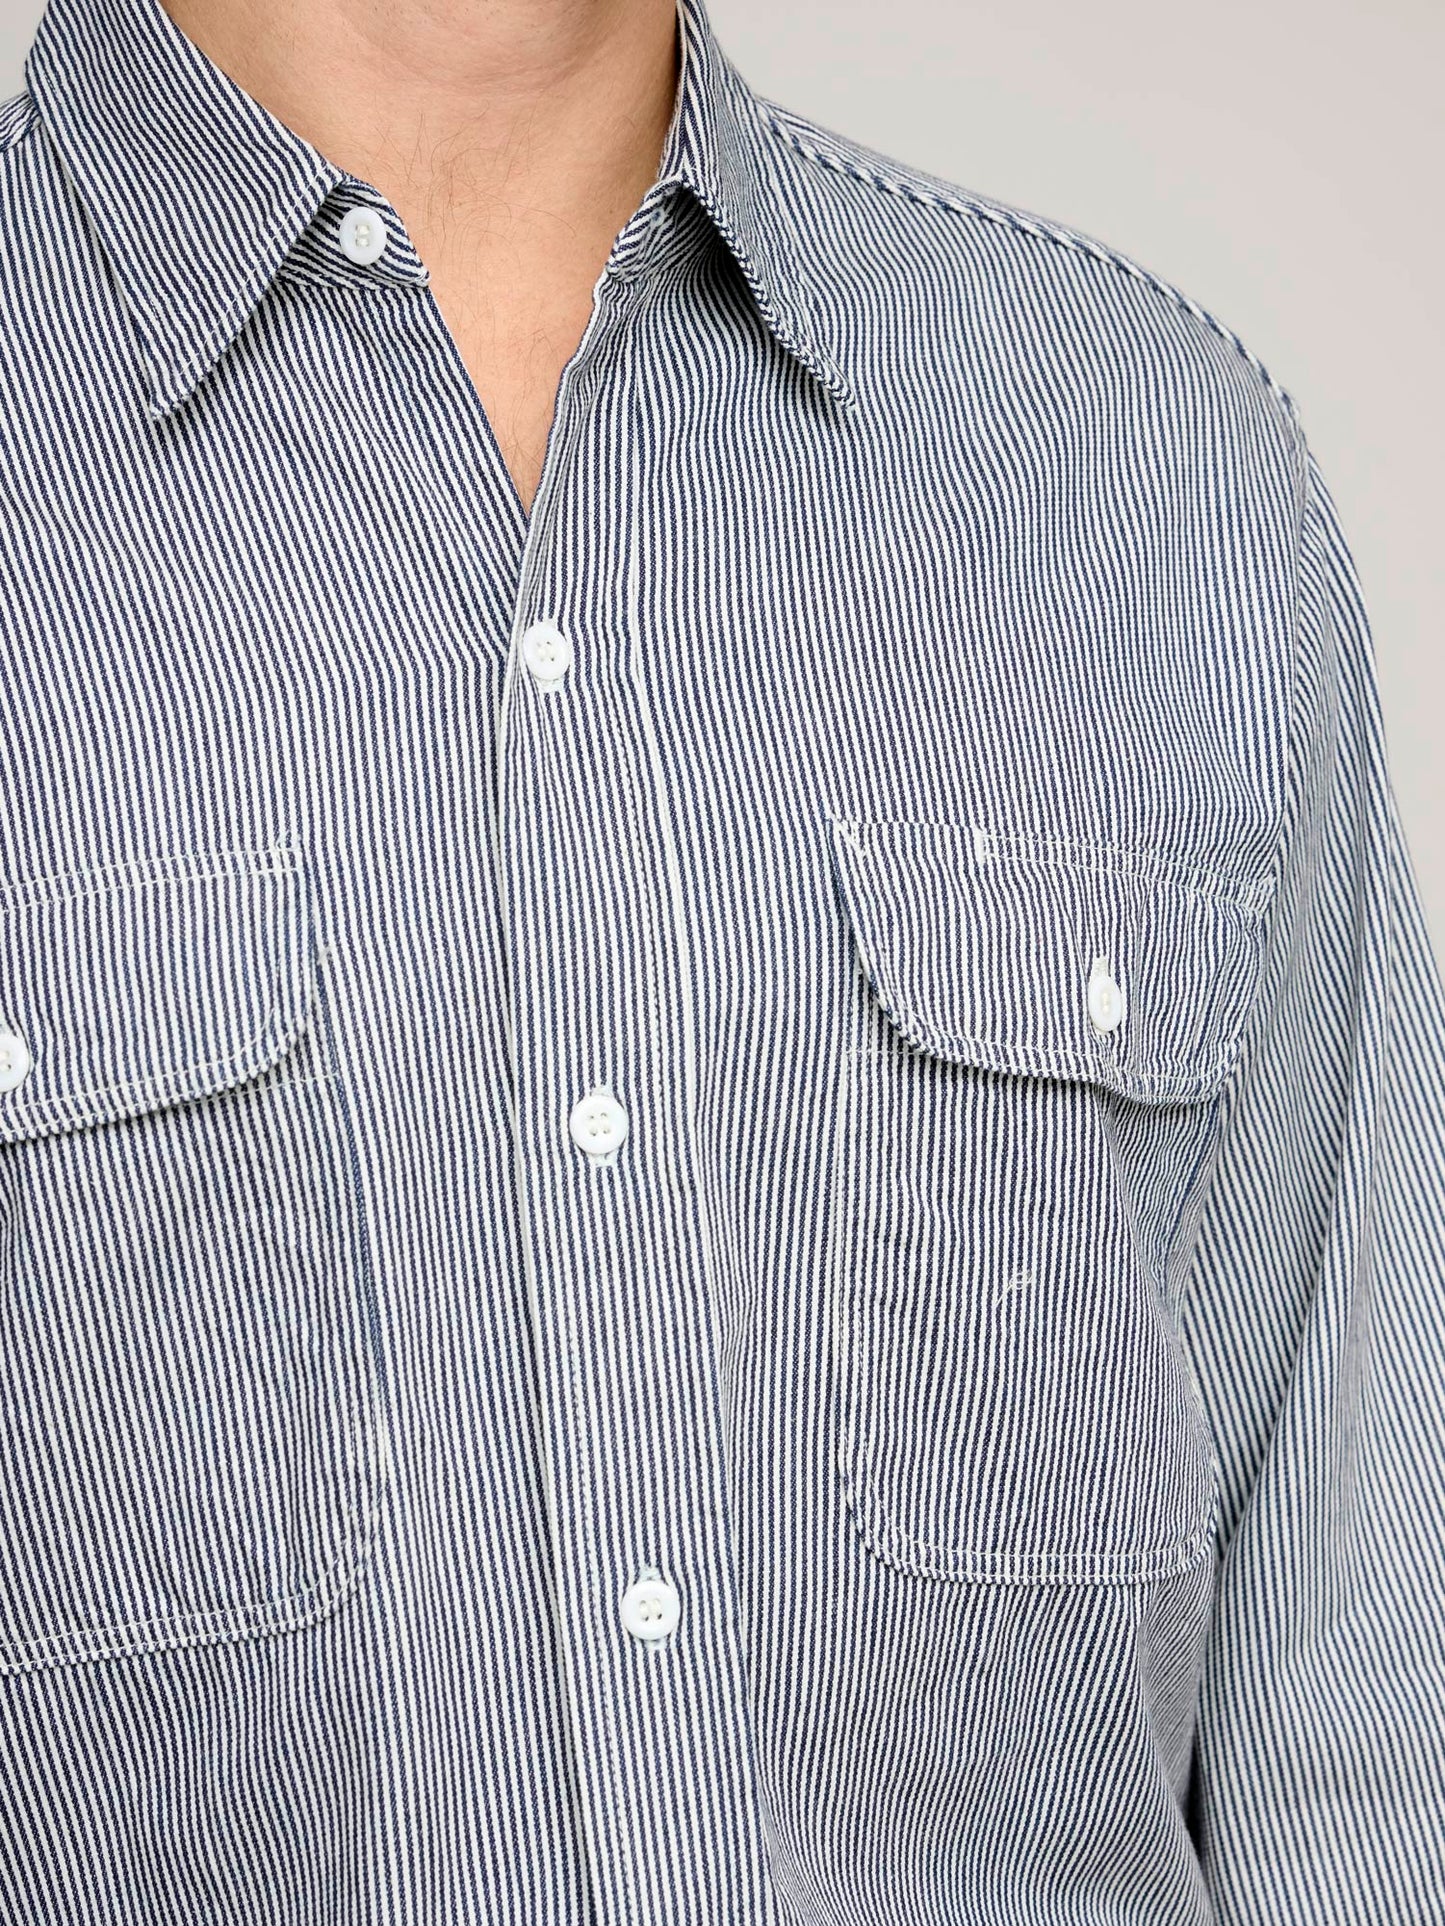 Work Shirt, Hickory Stripe